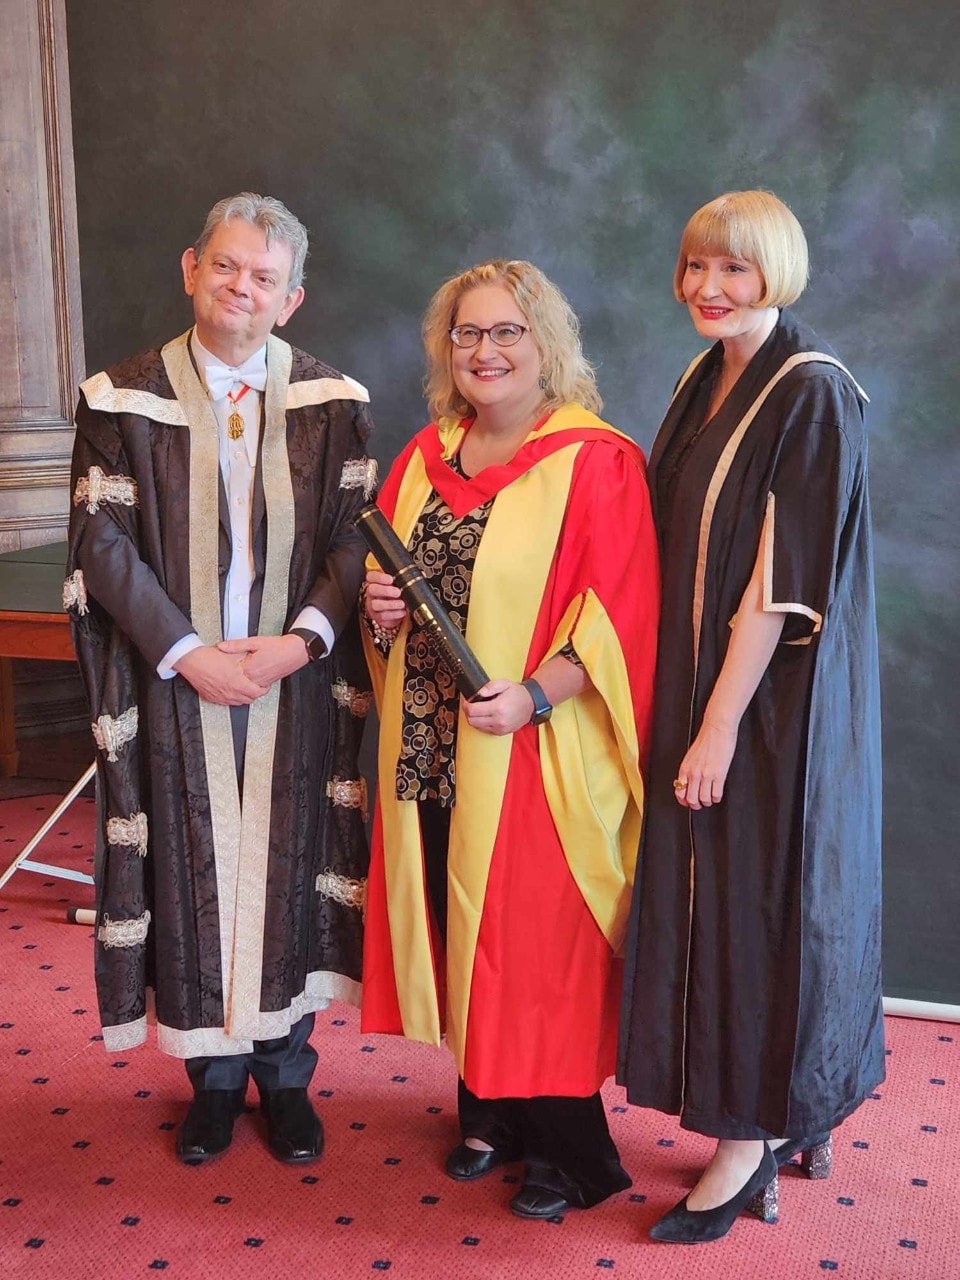 Professor Kathy Belov in academic robes after receiving her Honorary Doctorate